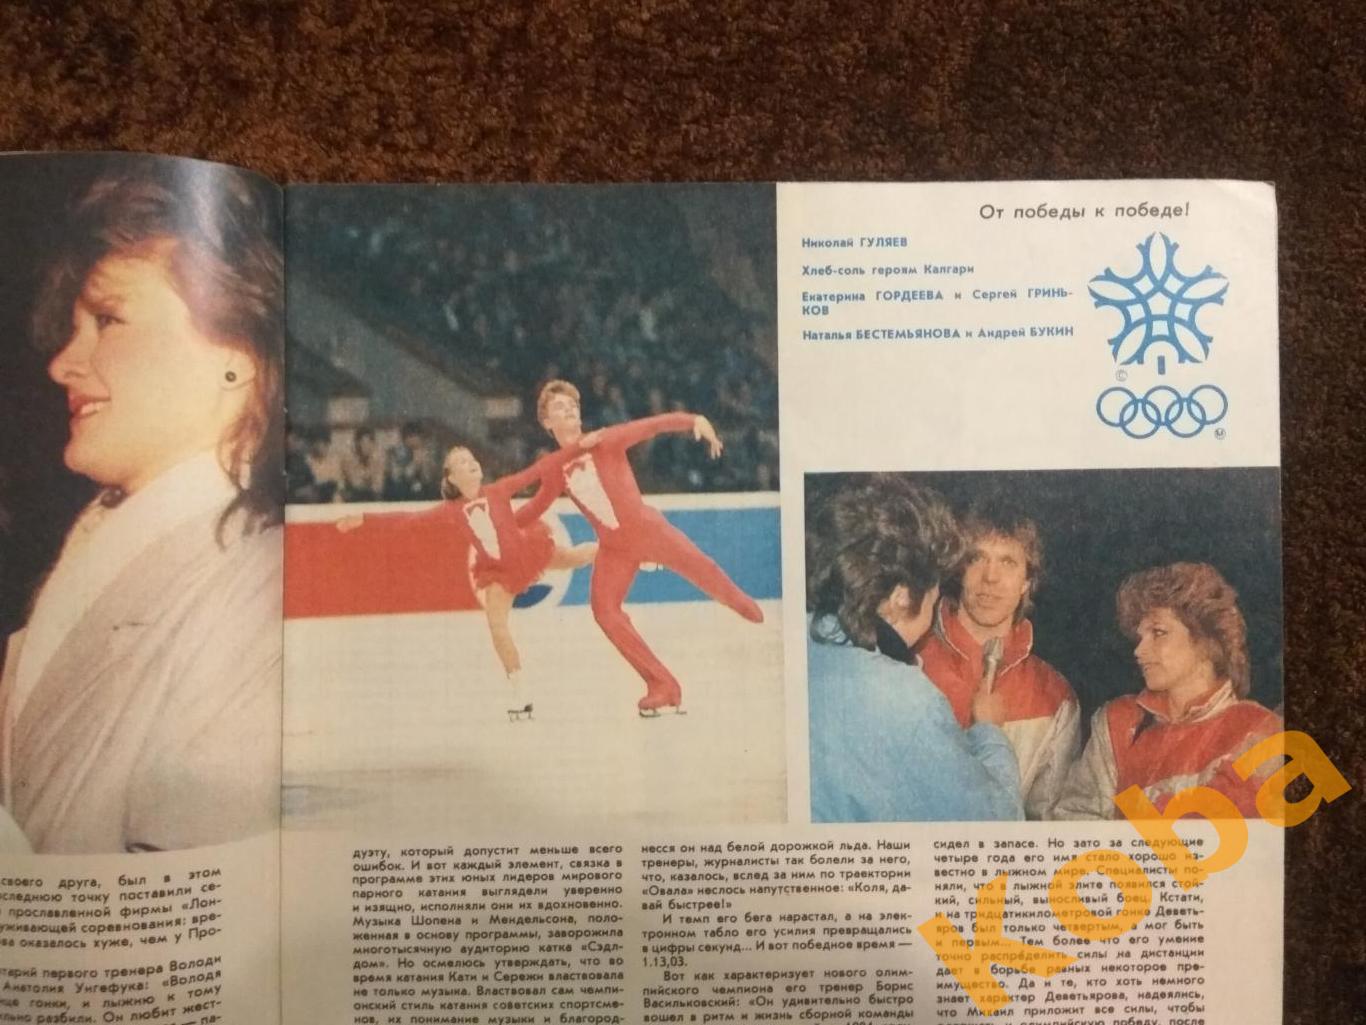 Фанаты Футбол Хоккей Мыльников Олимпиада Калгари 88 Физкультура и спорт 1988 №5 4